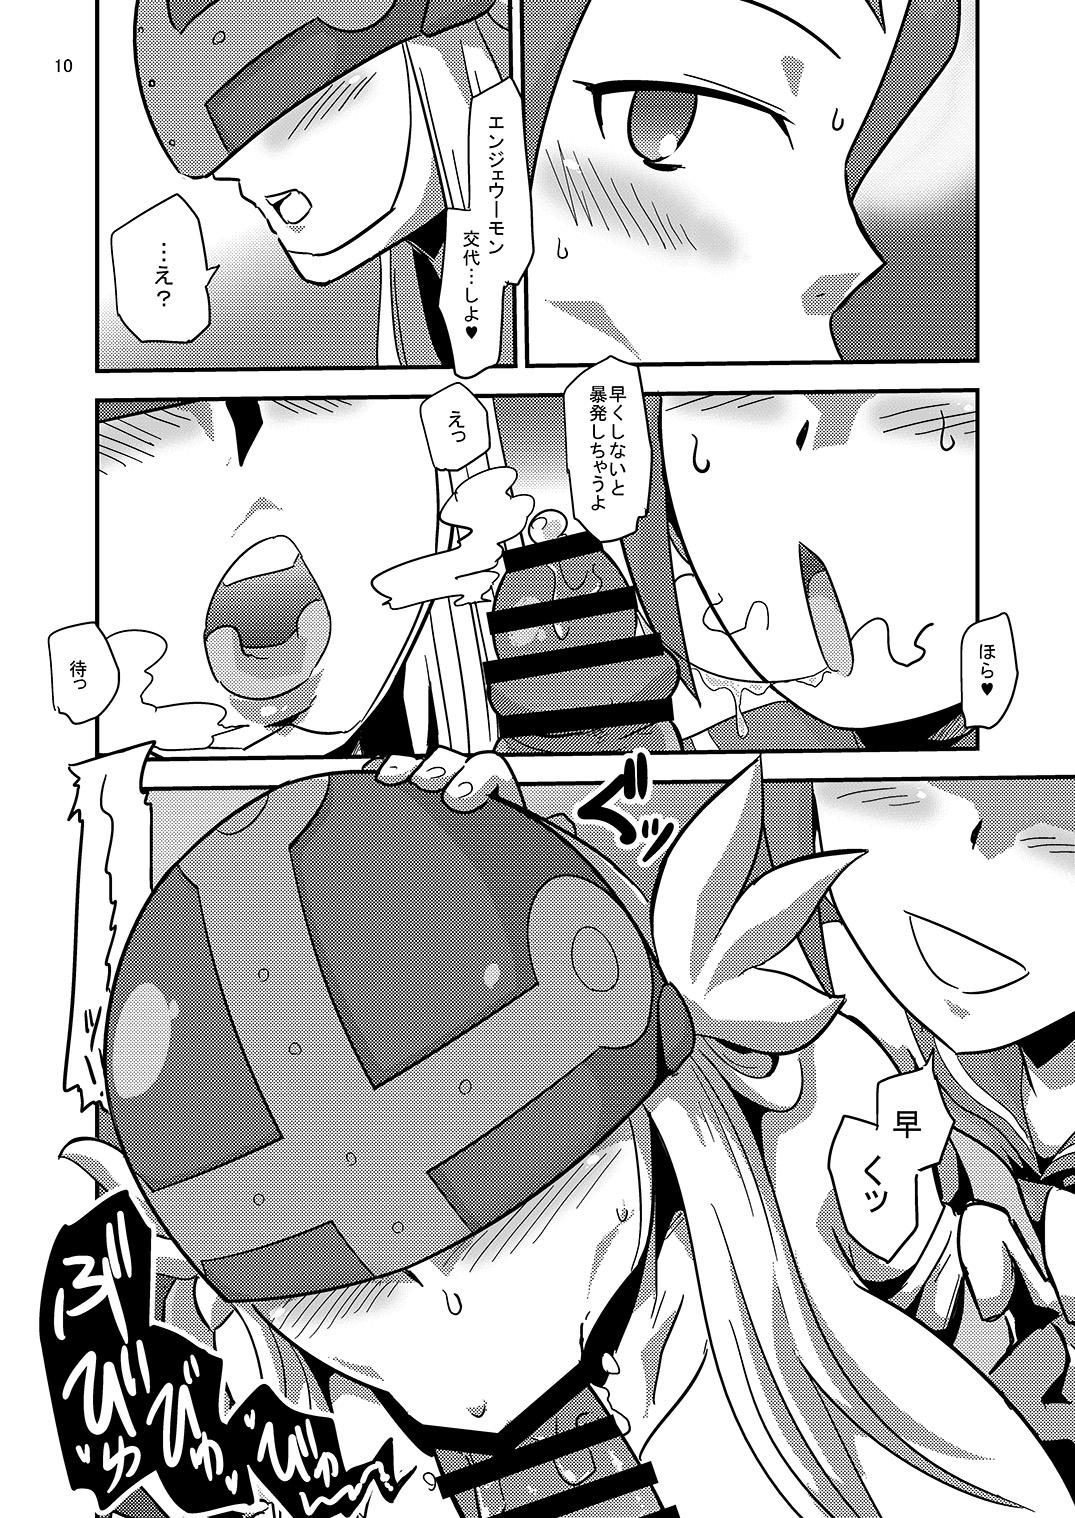 Pervert DIGITAL BRAINWASH PROGRAM - Digimon Digimon adventure tri. Innocent - Page 11